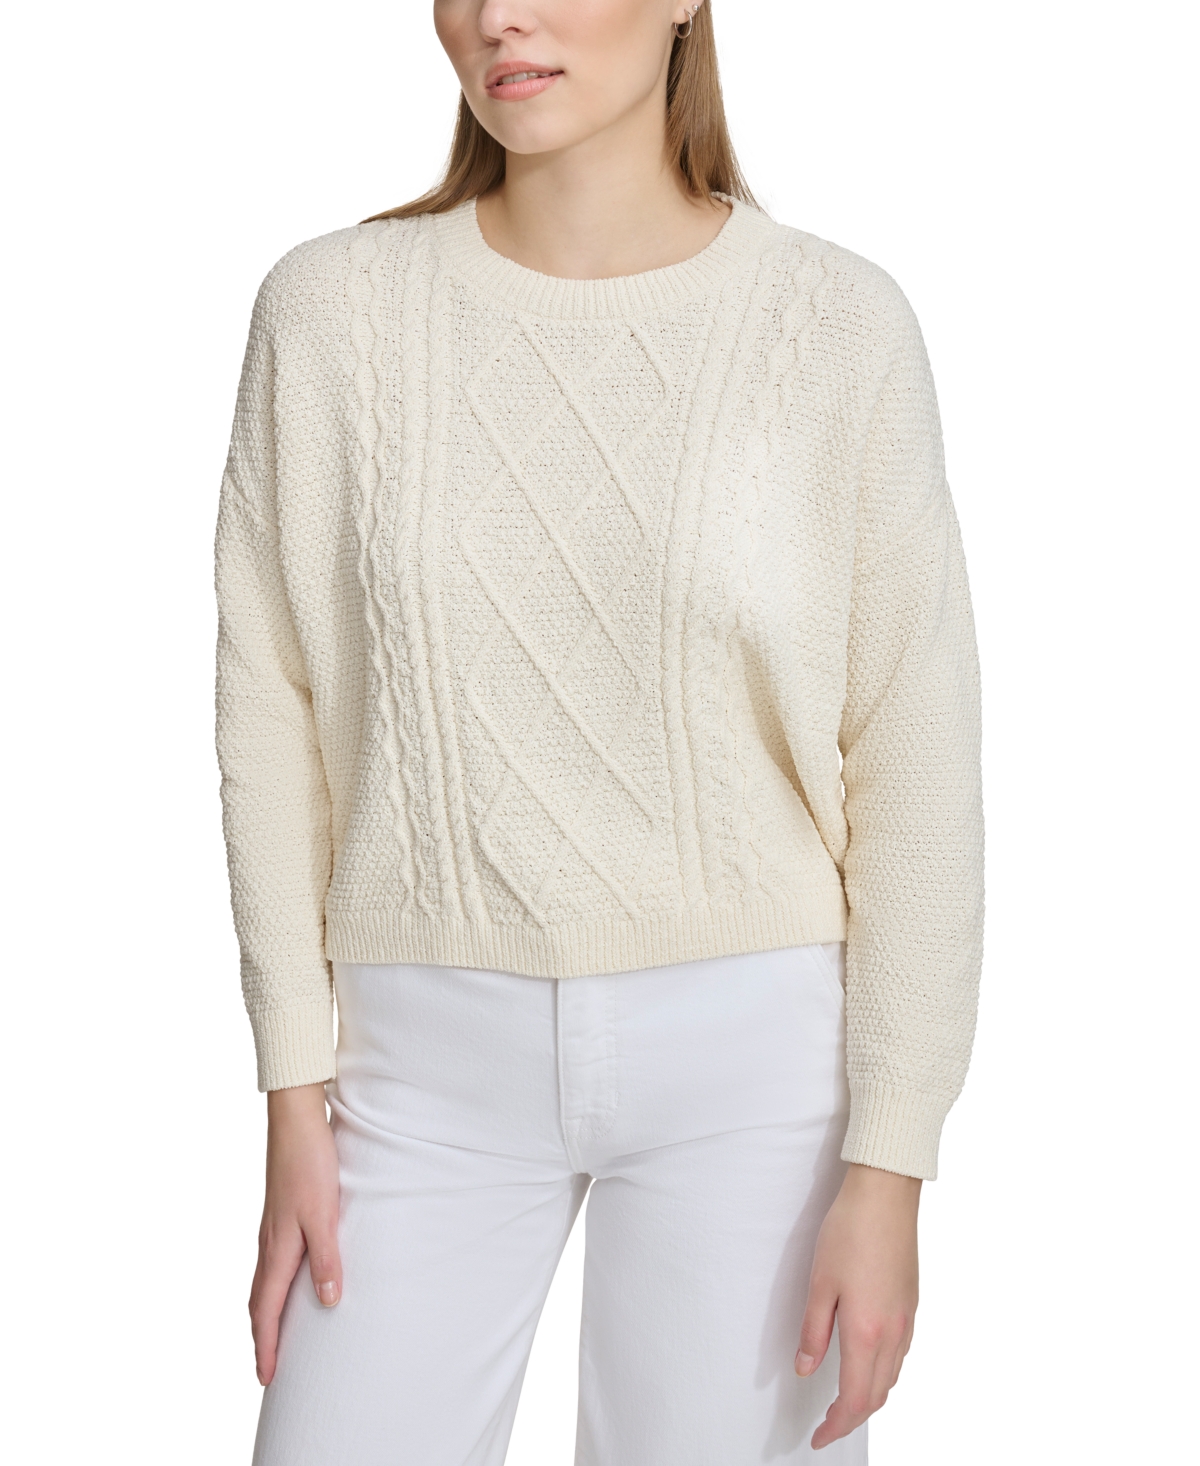 Women's Mixed Cable-Knit Drop-Shoulder Sweater - G0h - Eggnog